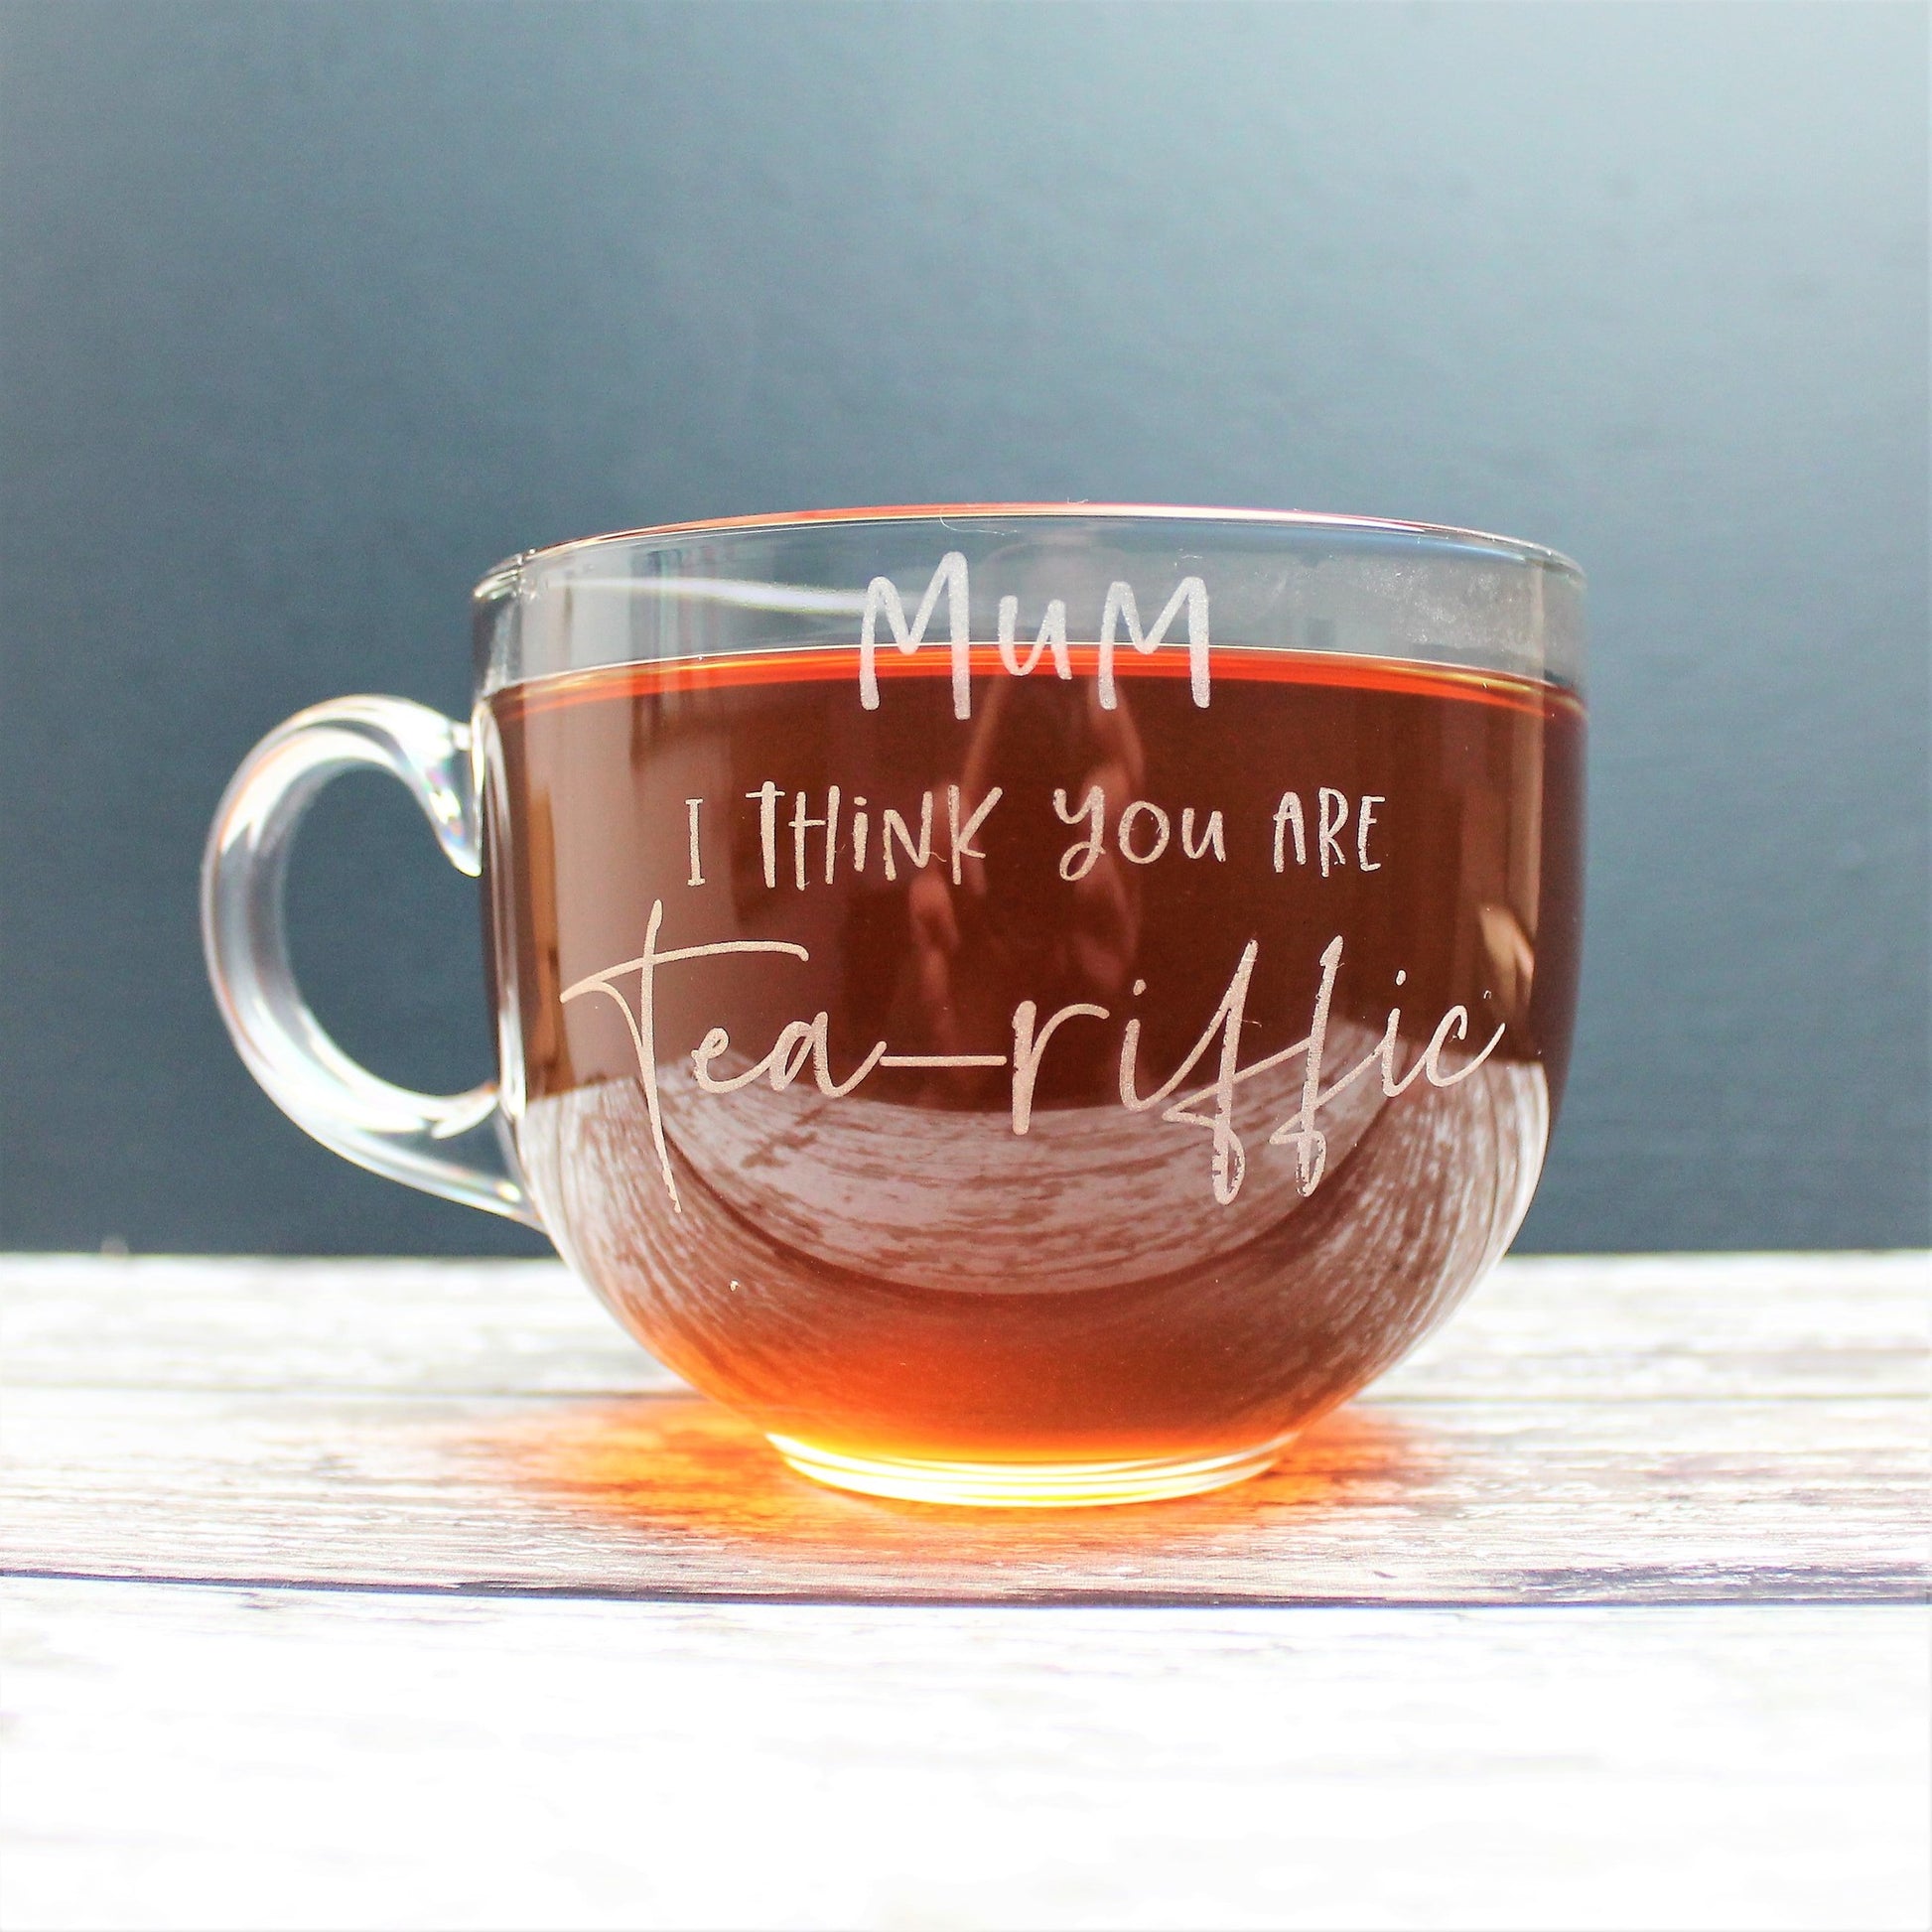 Glass tea mug - Large size for tea loving mum